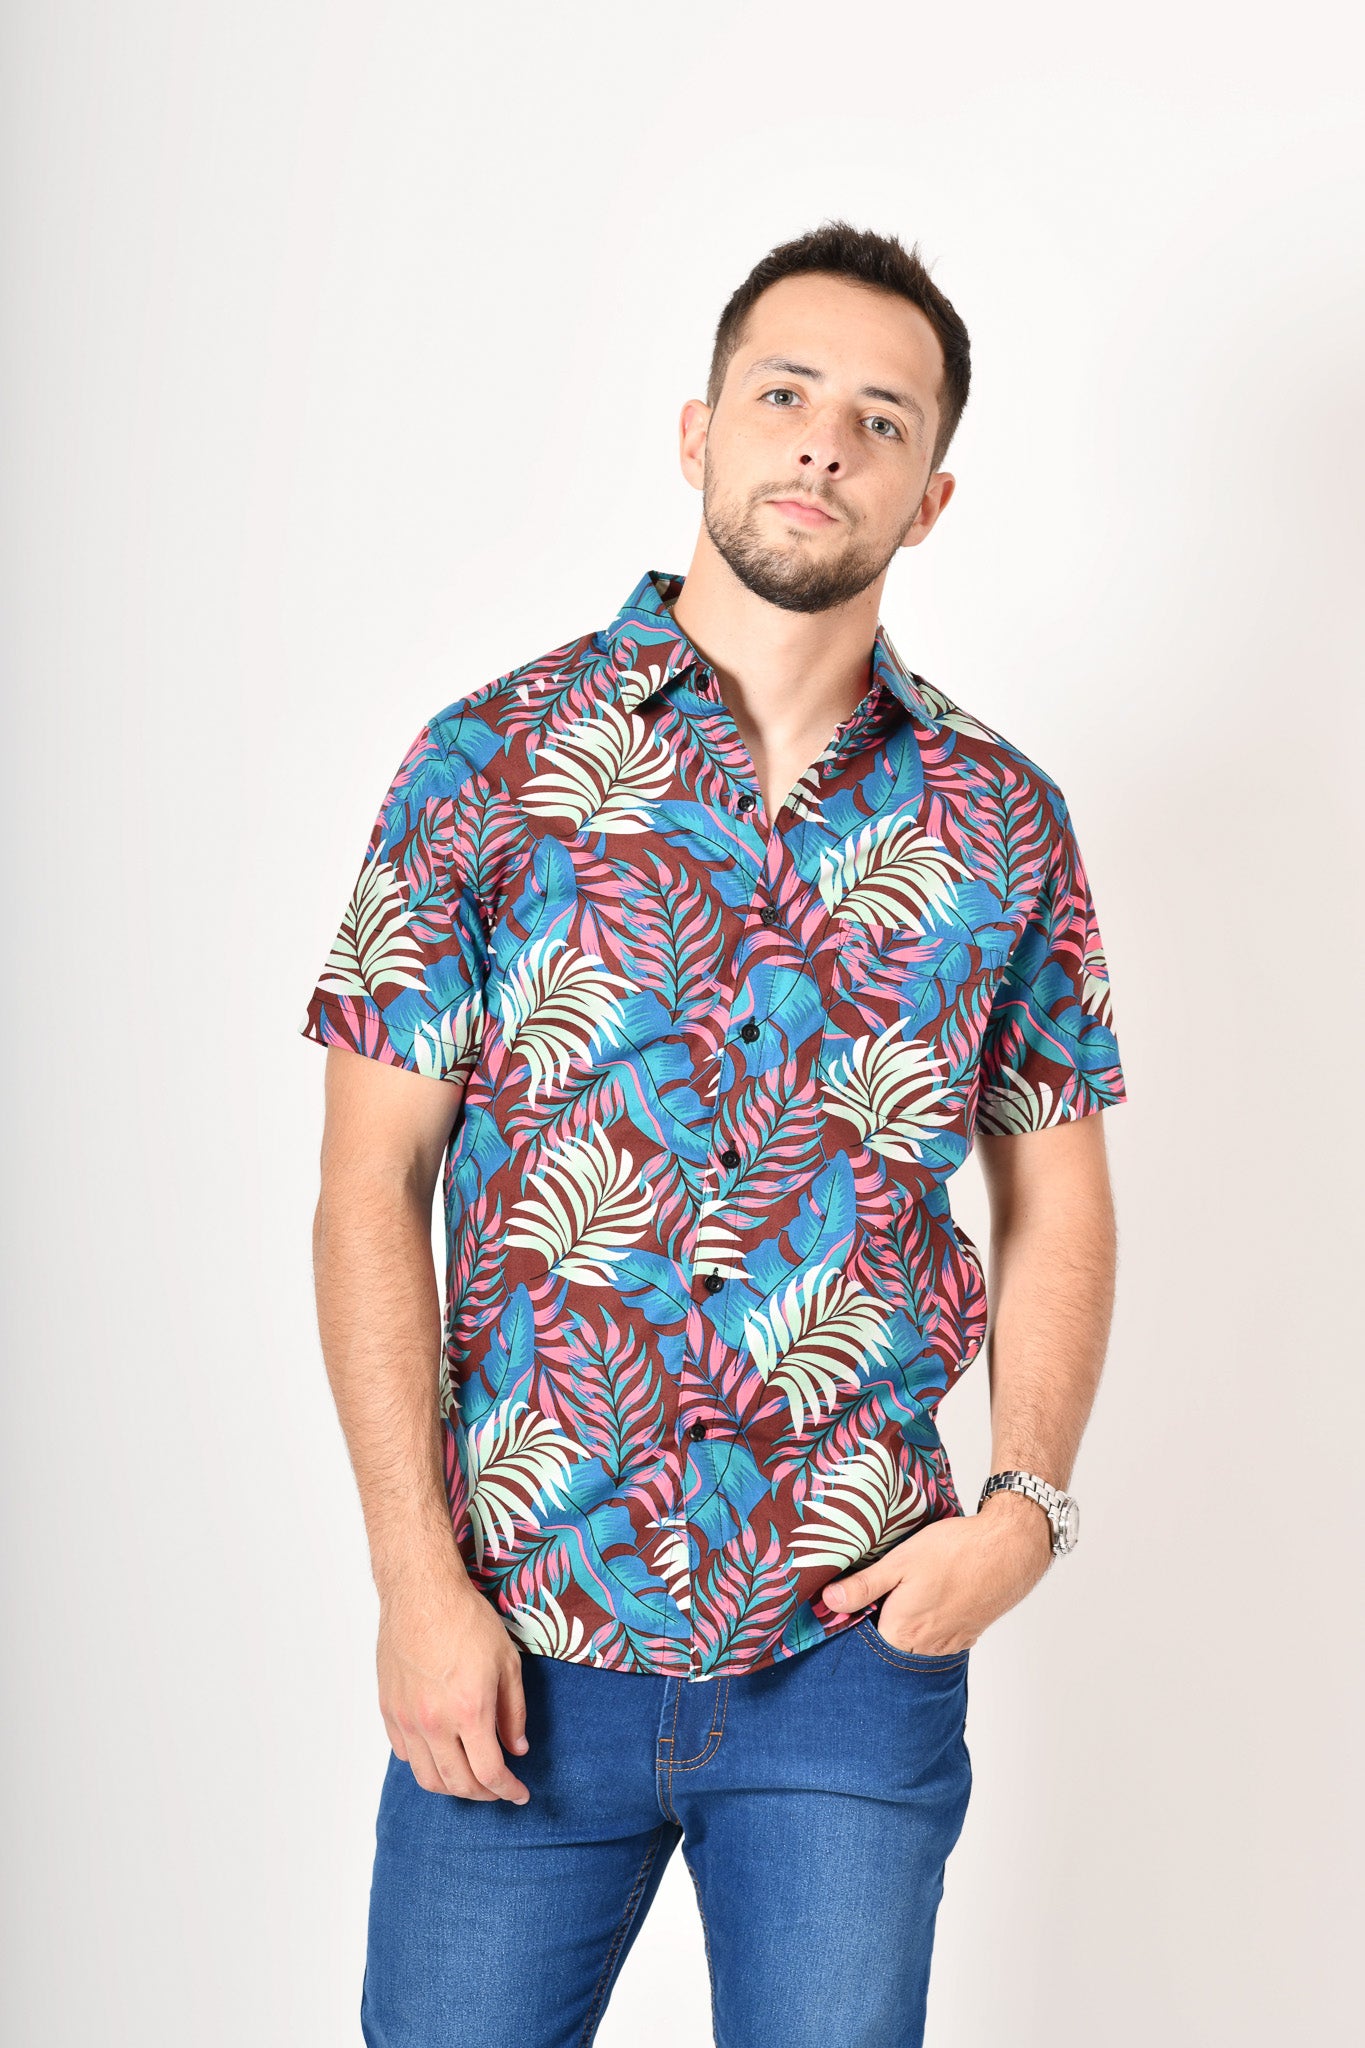 Camisa tropical de flores - turquesa corinta